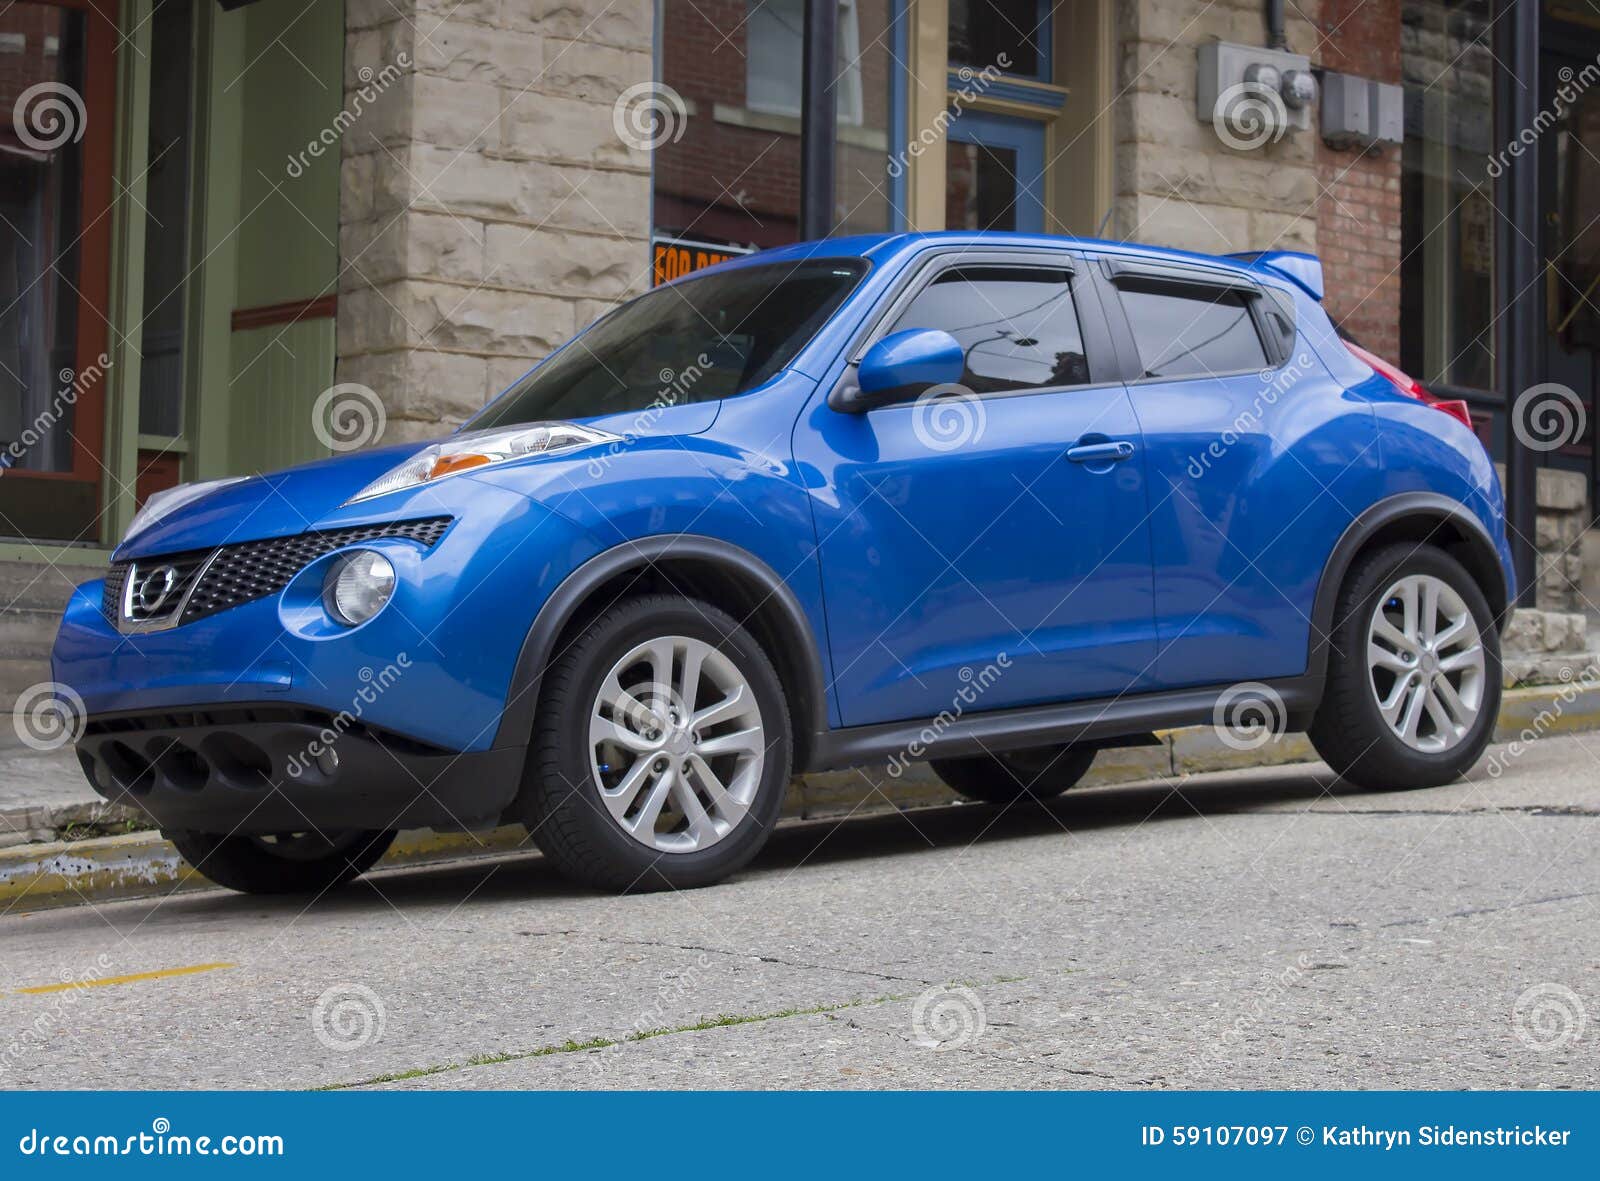 Full Xx Porn Videos Download Tiny Juke - 2015 Nissan Juke Sedan Blue Stock Image - Image of modern, model: 59107097